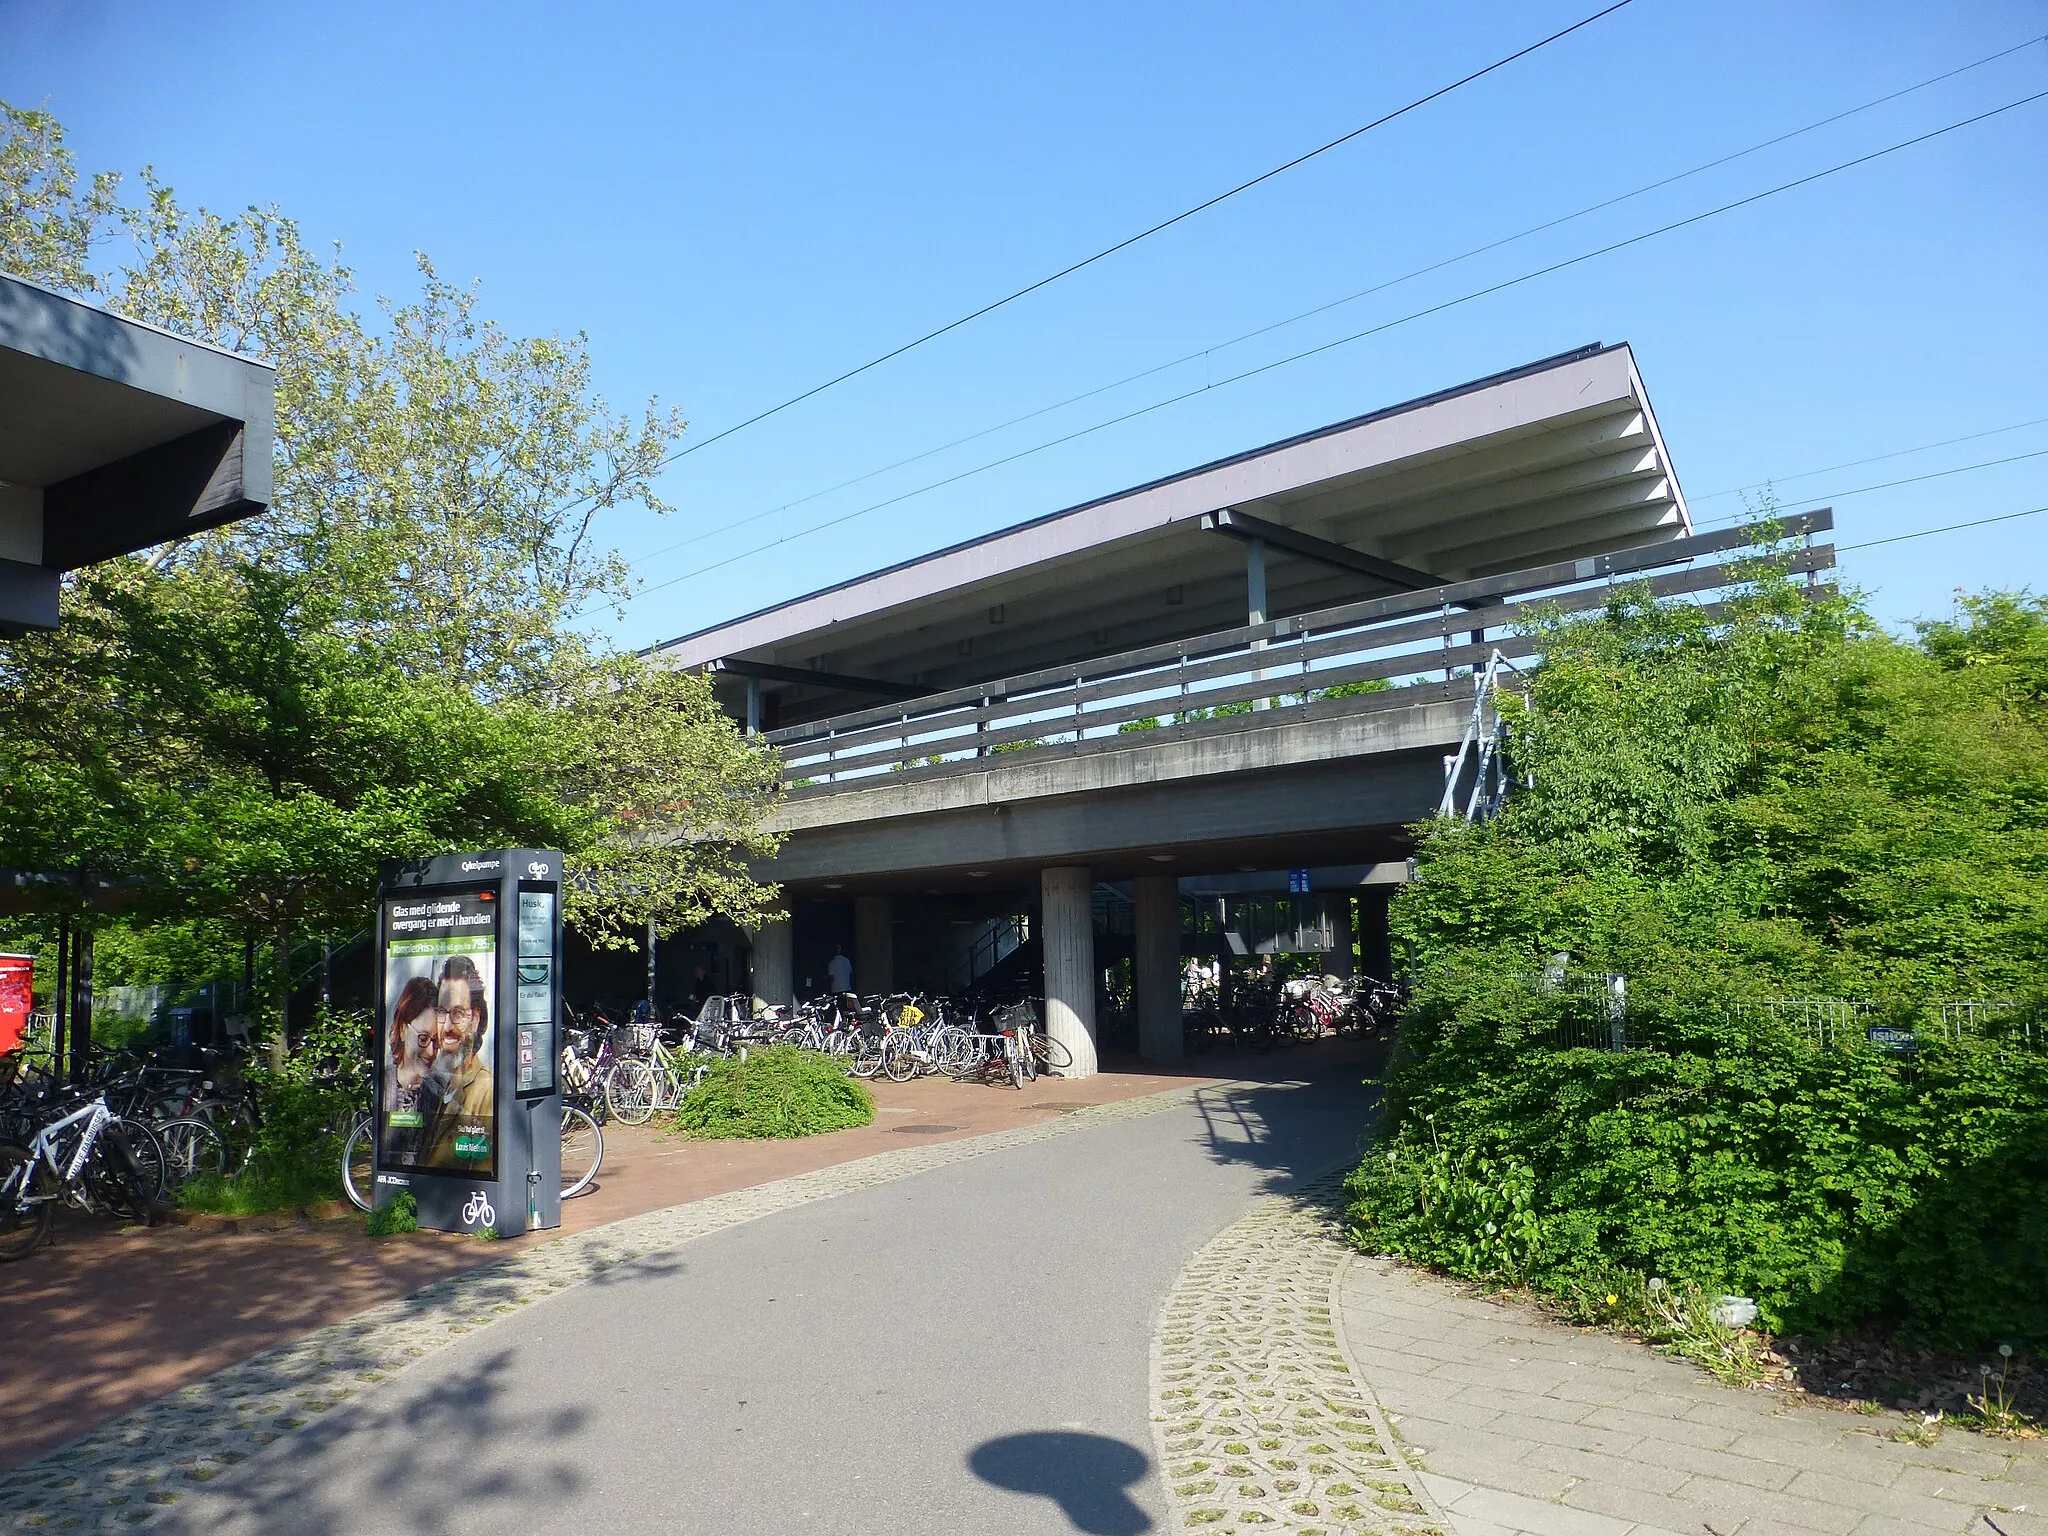 Photo showing: Greve Station, a S-train station on Køge Bugt-banen between Copenhagen and Køge in Denmark.